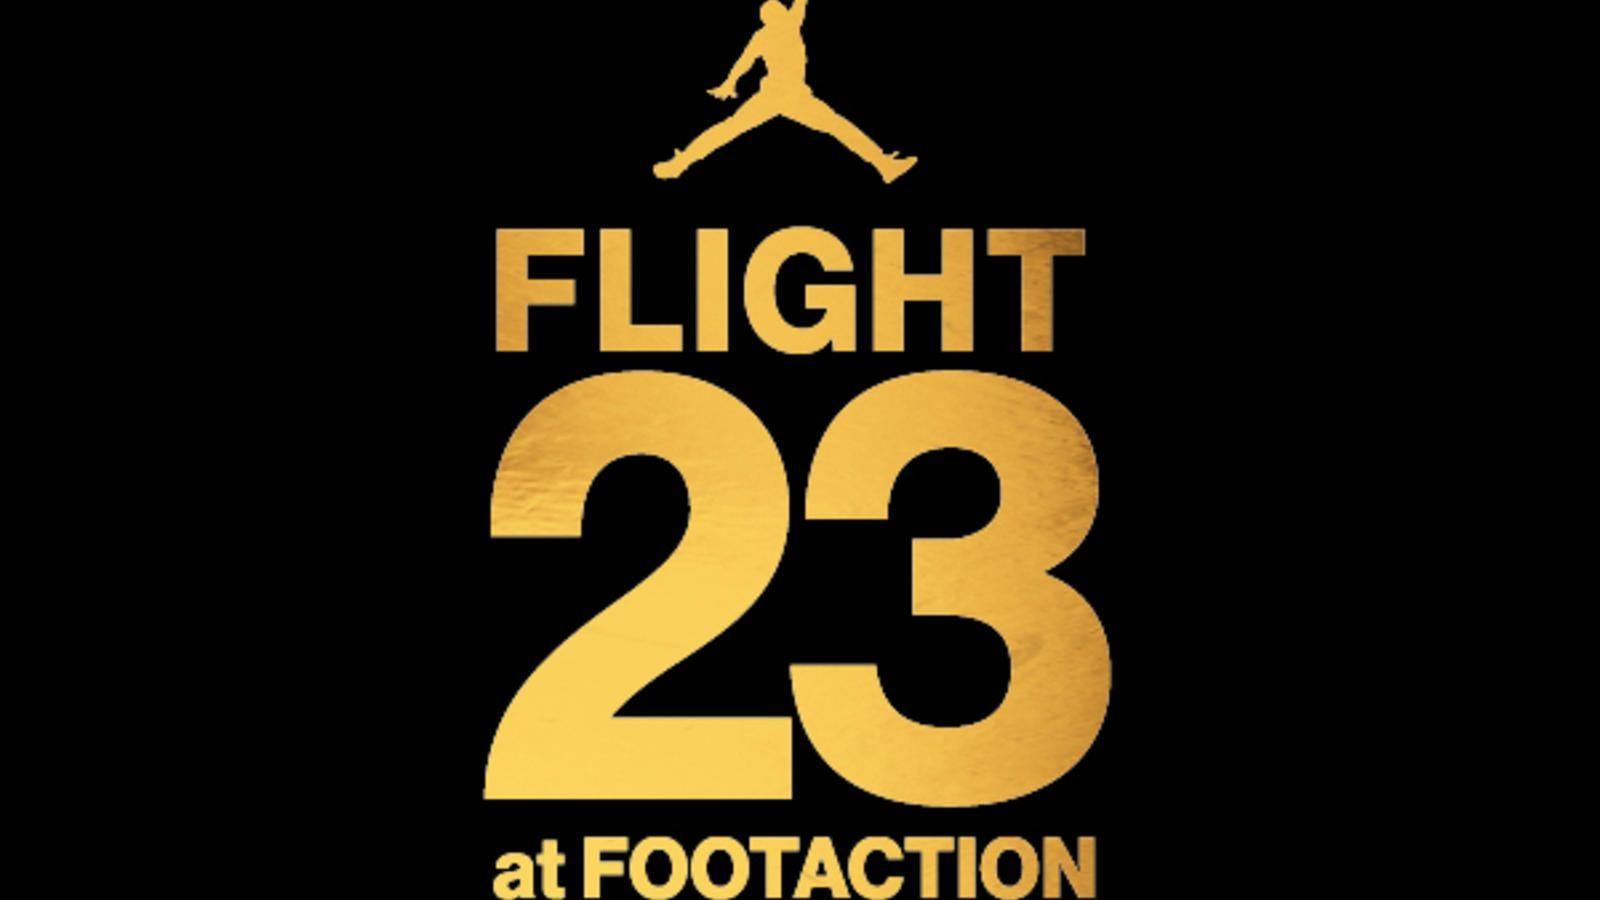 Air Jordan 23 Logo - Flight 23 at Footaction to be First North America Jordan-only retail ...